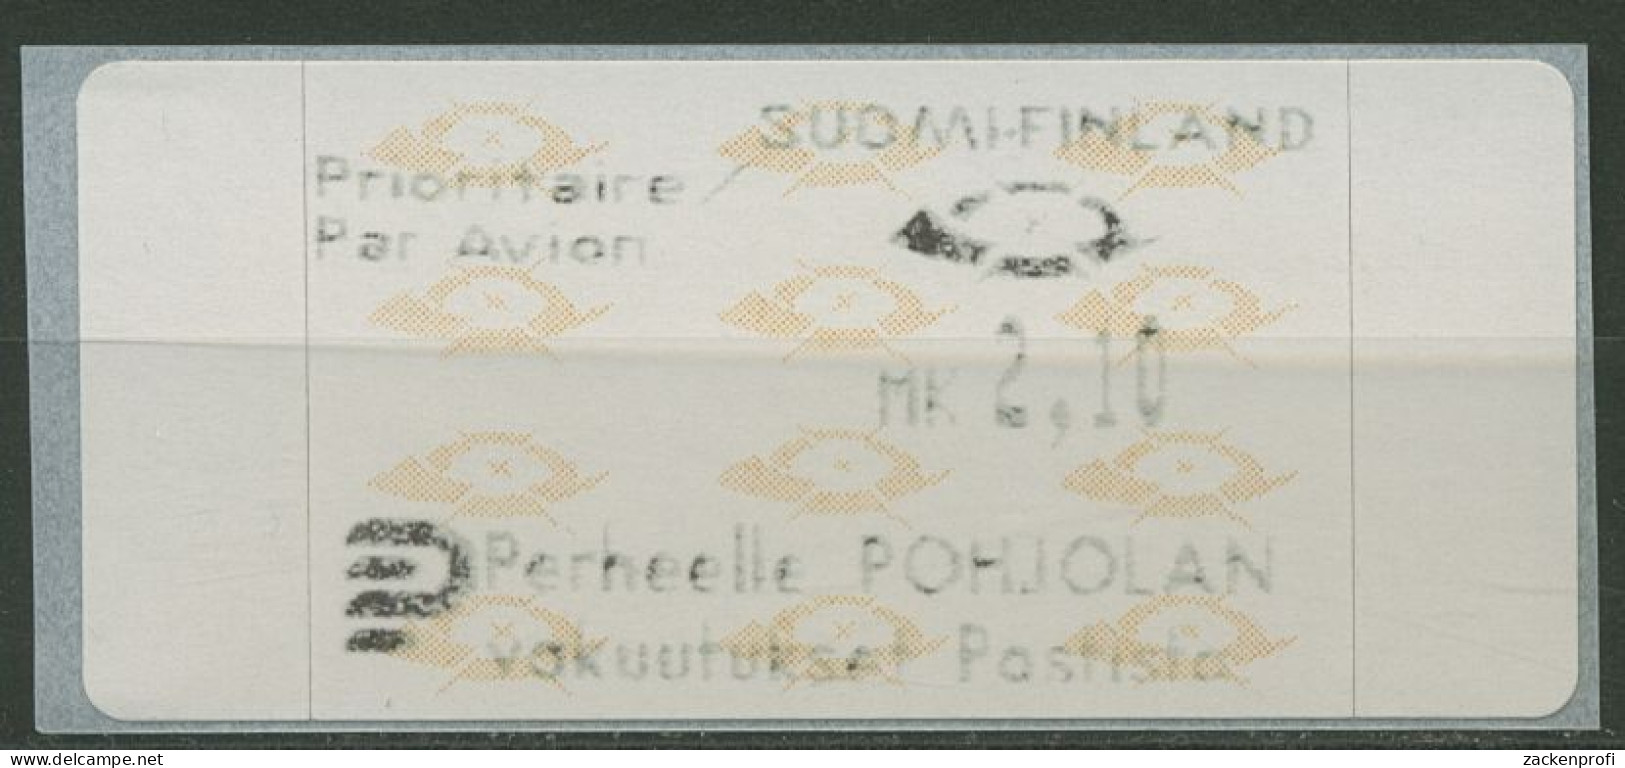 Finnland Automatenmarken 1992 Posthörner Einzelwert ATM 12.3 Z6 Postfrisch - Timbres De Distributeurs [ATM]